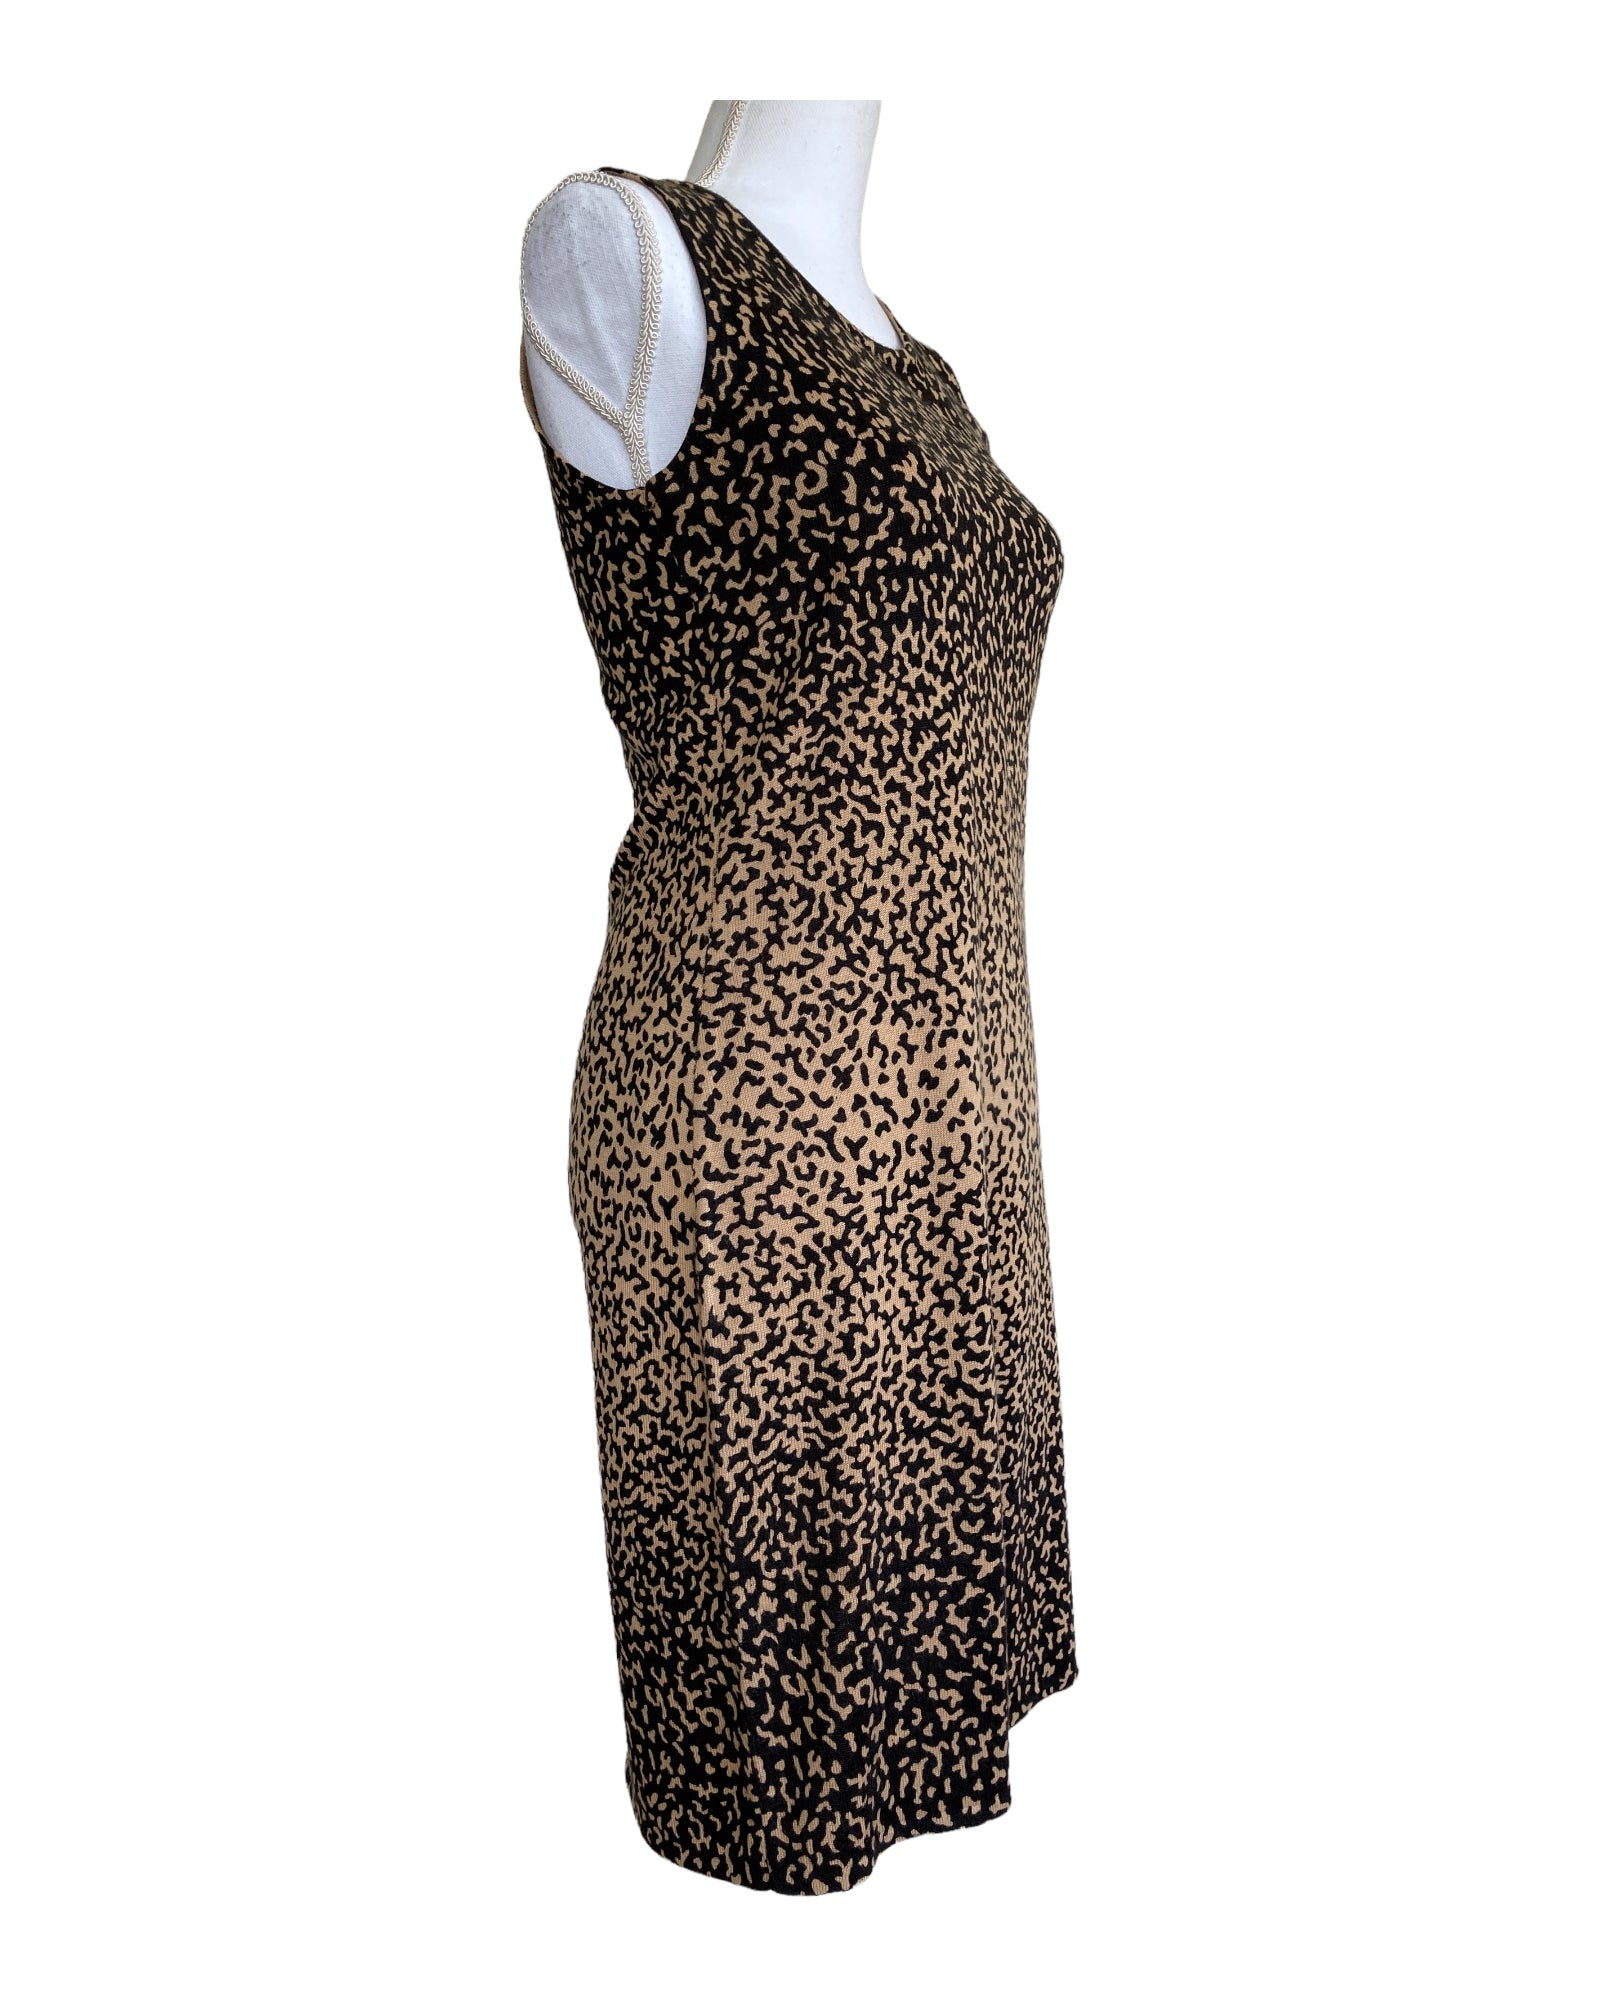 Calvin Klein Sleeveless Animal Print Sweater Dress, M